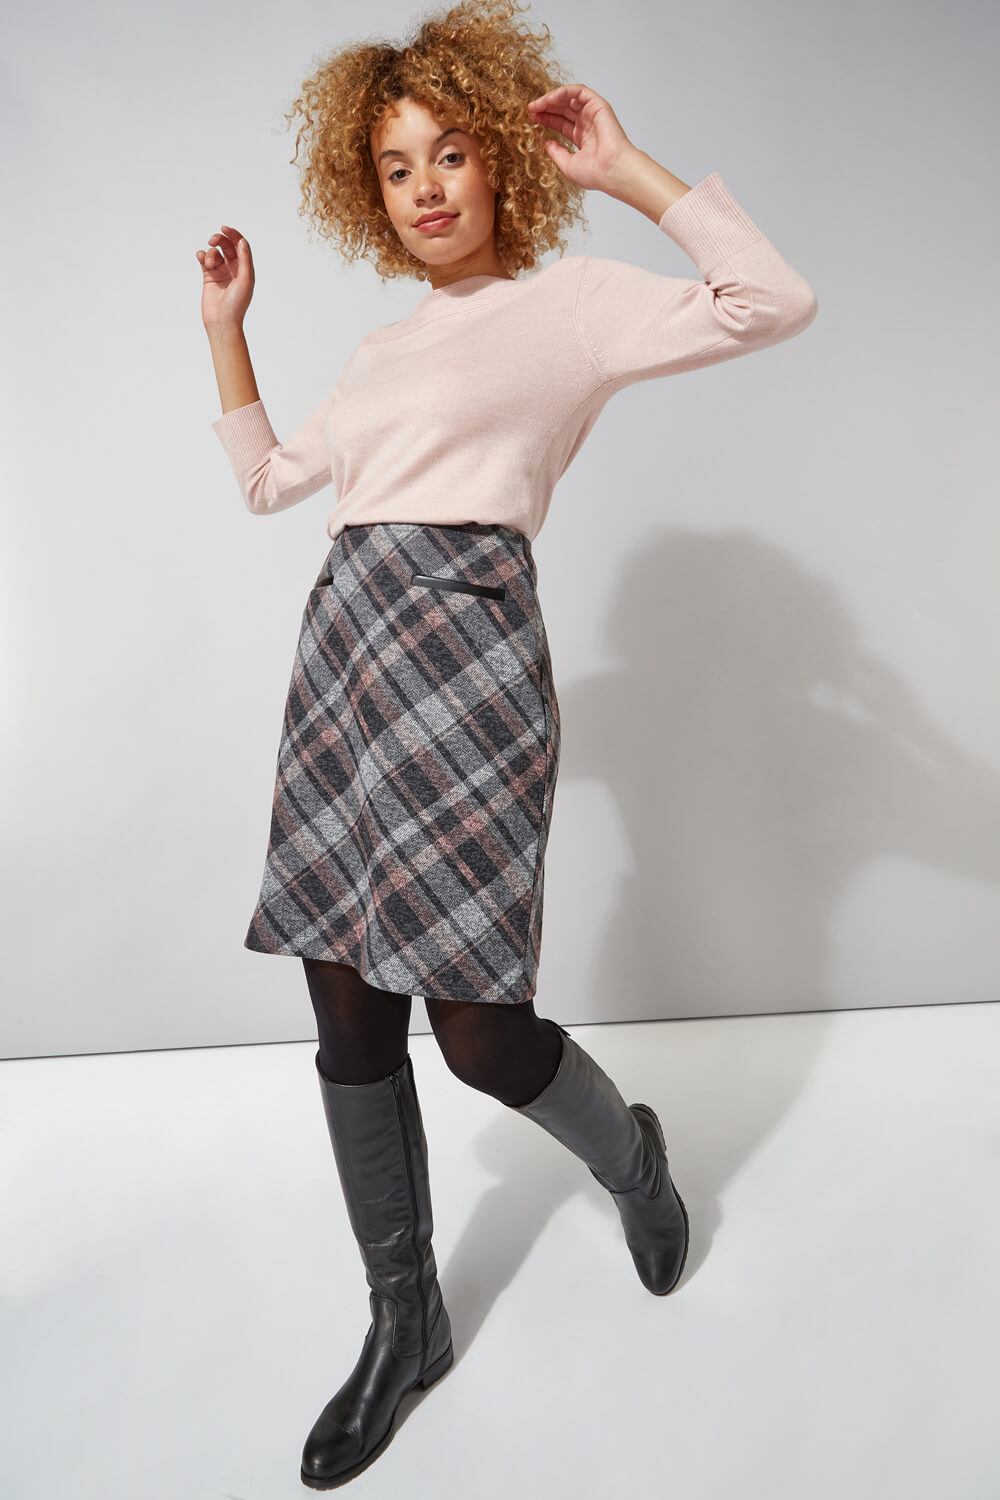 PINK Check Print Textured Skirt, Image 4 of 5